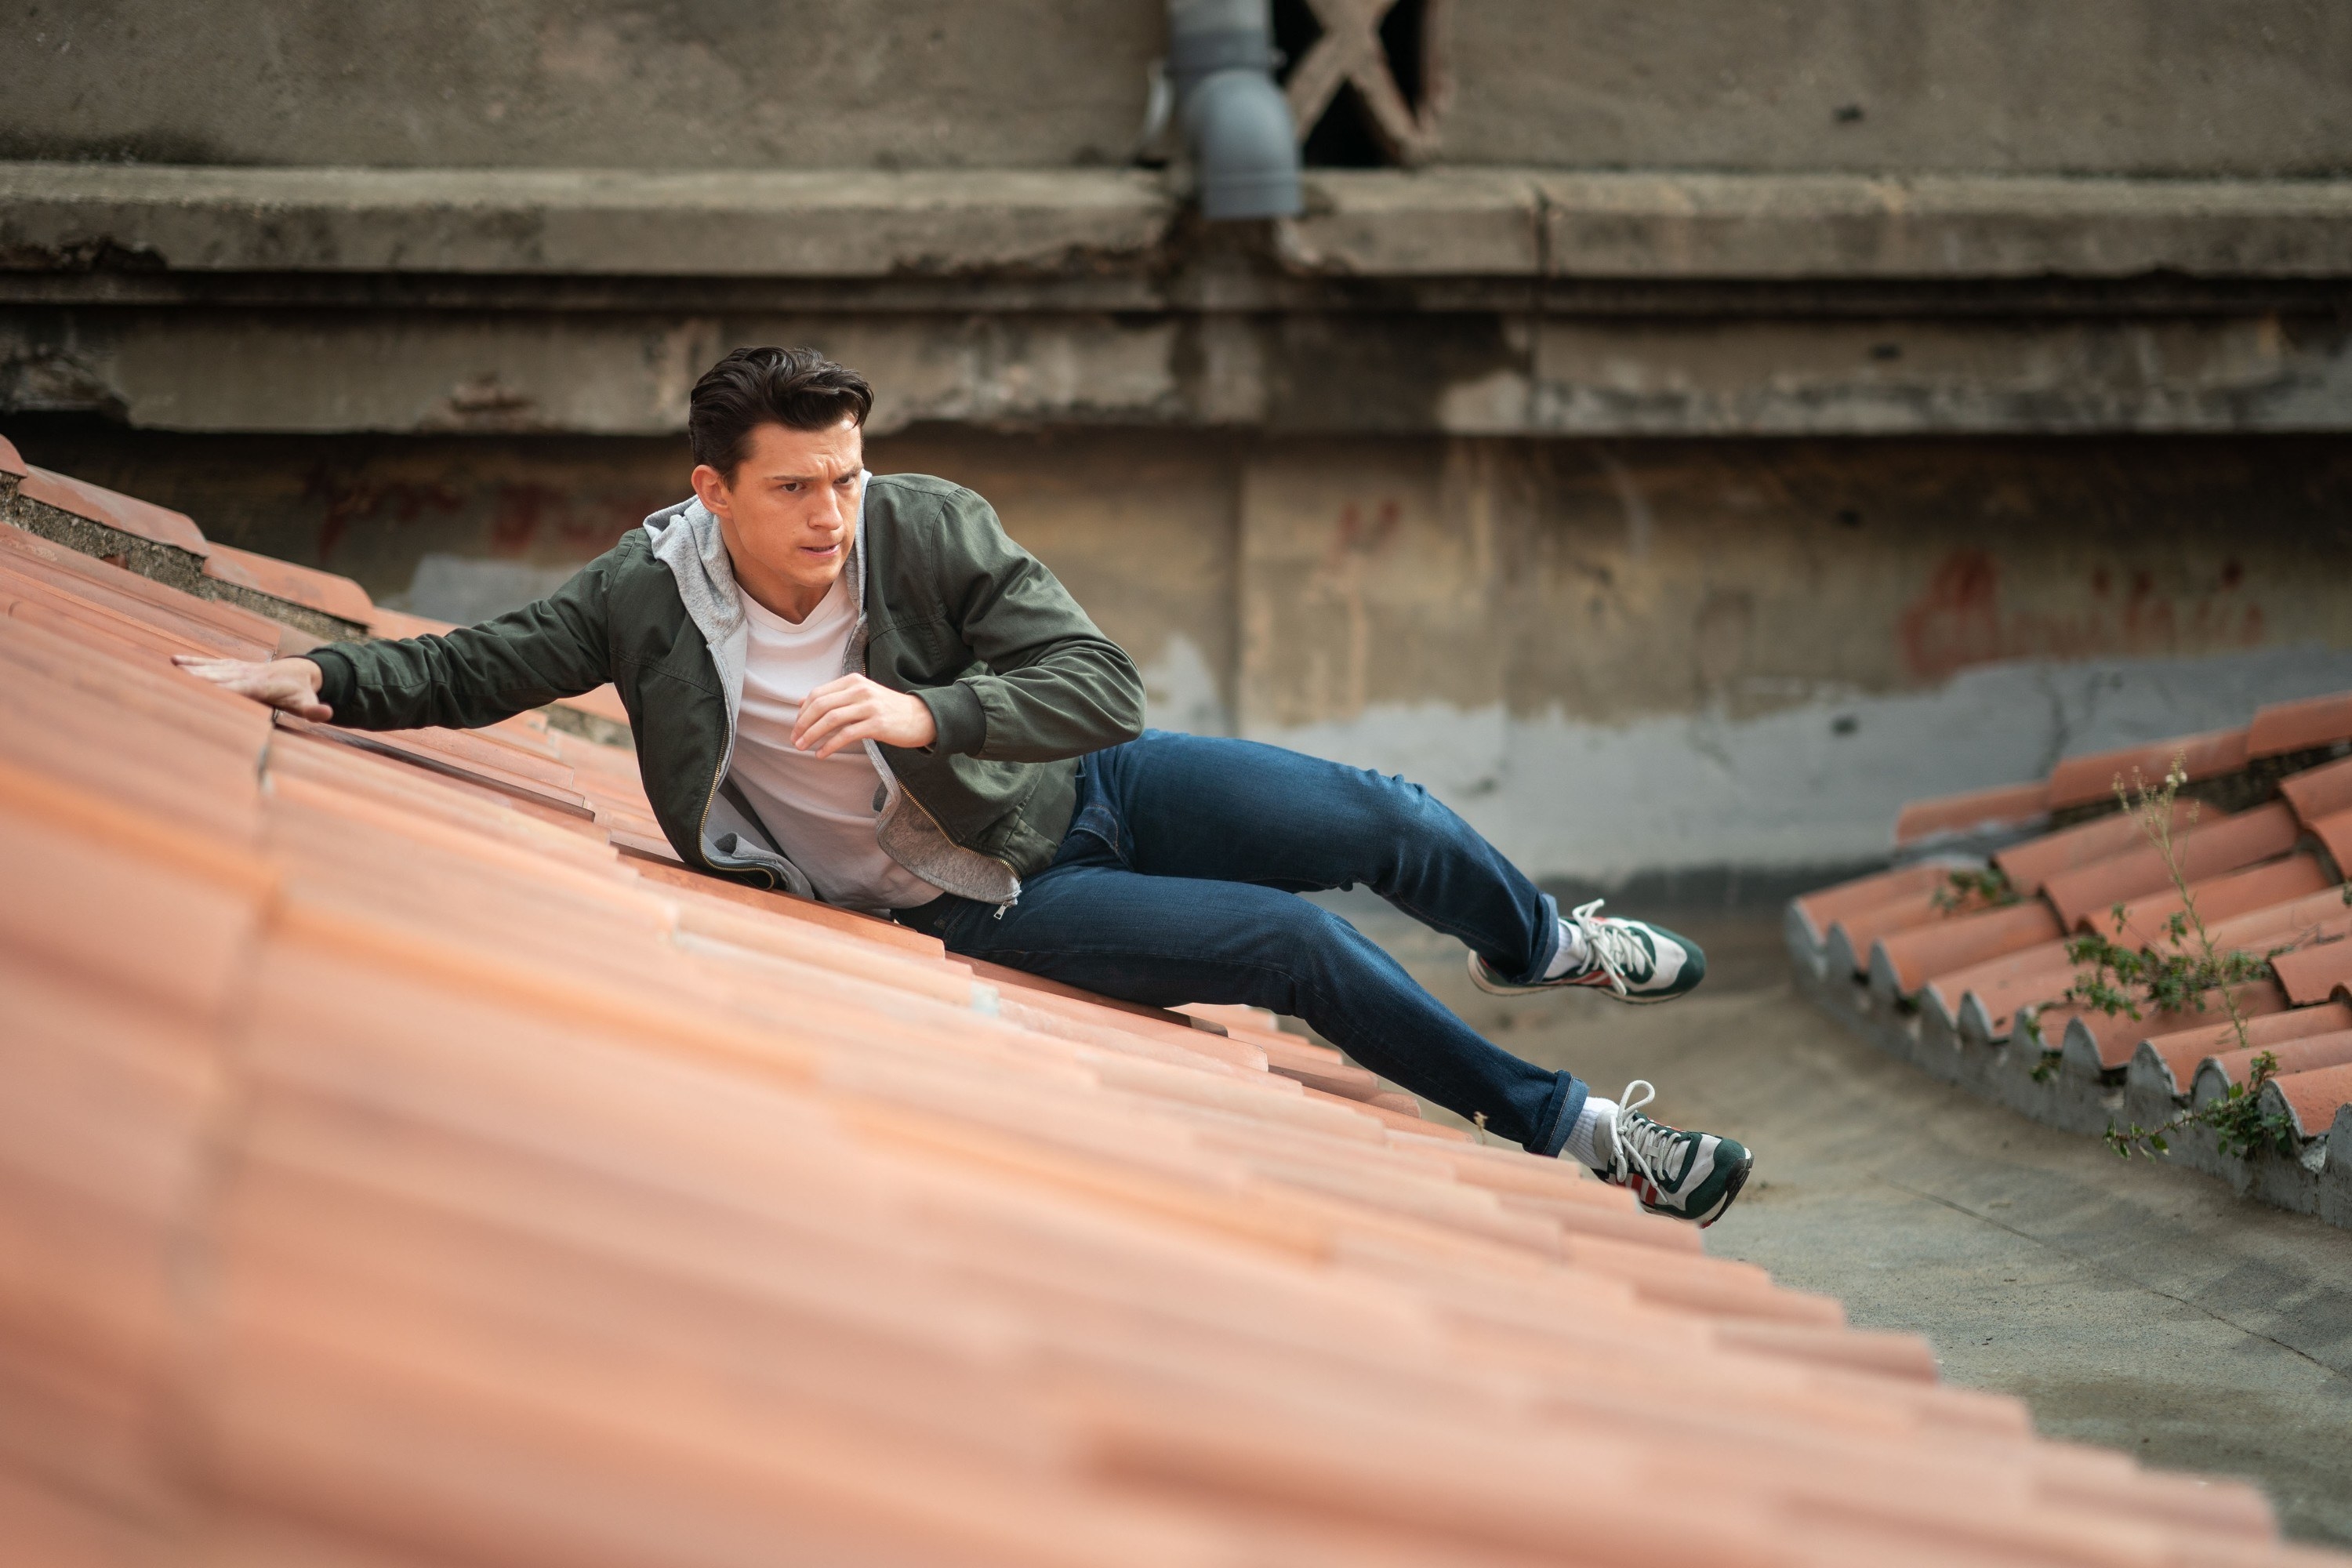 Tom slides down a roof